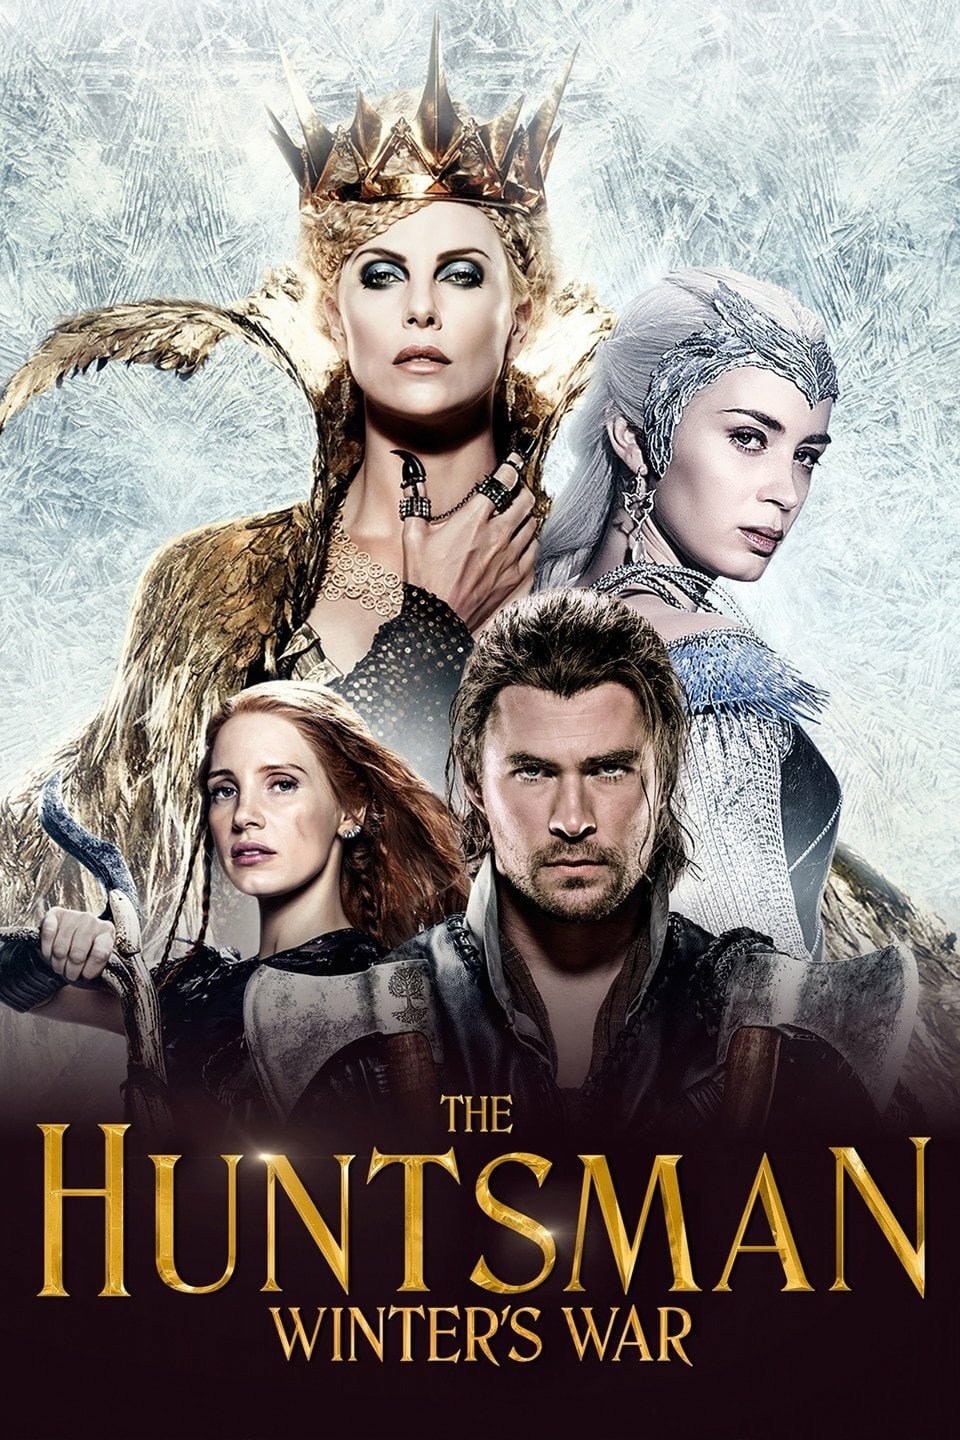 movie The Huntsman: Winter's War Image